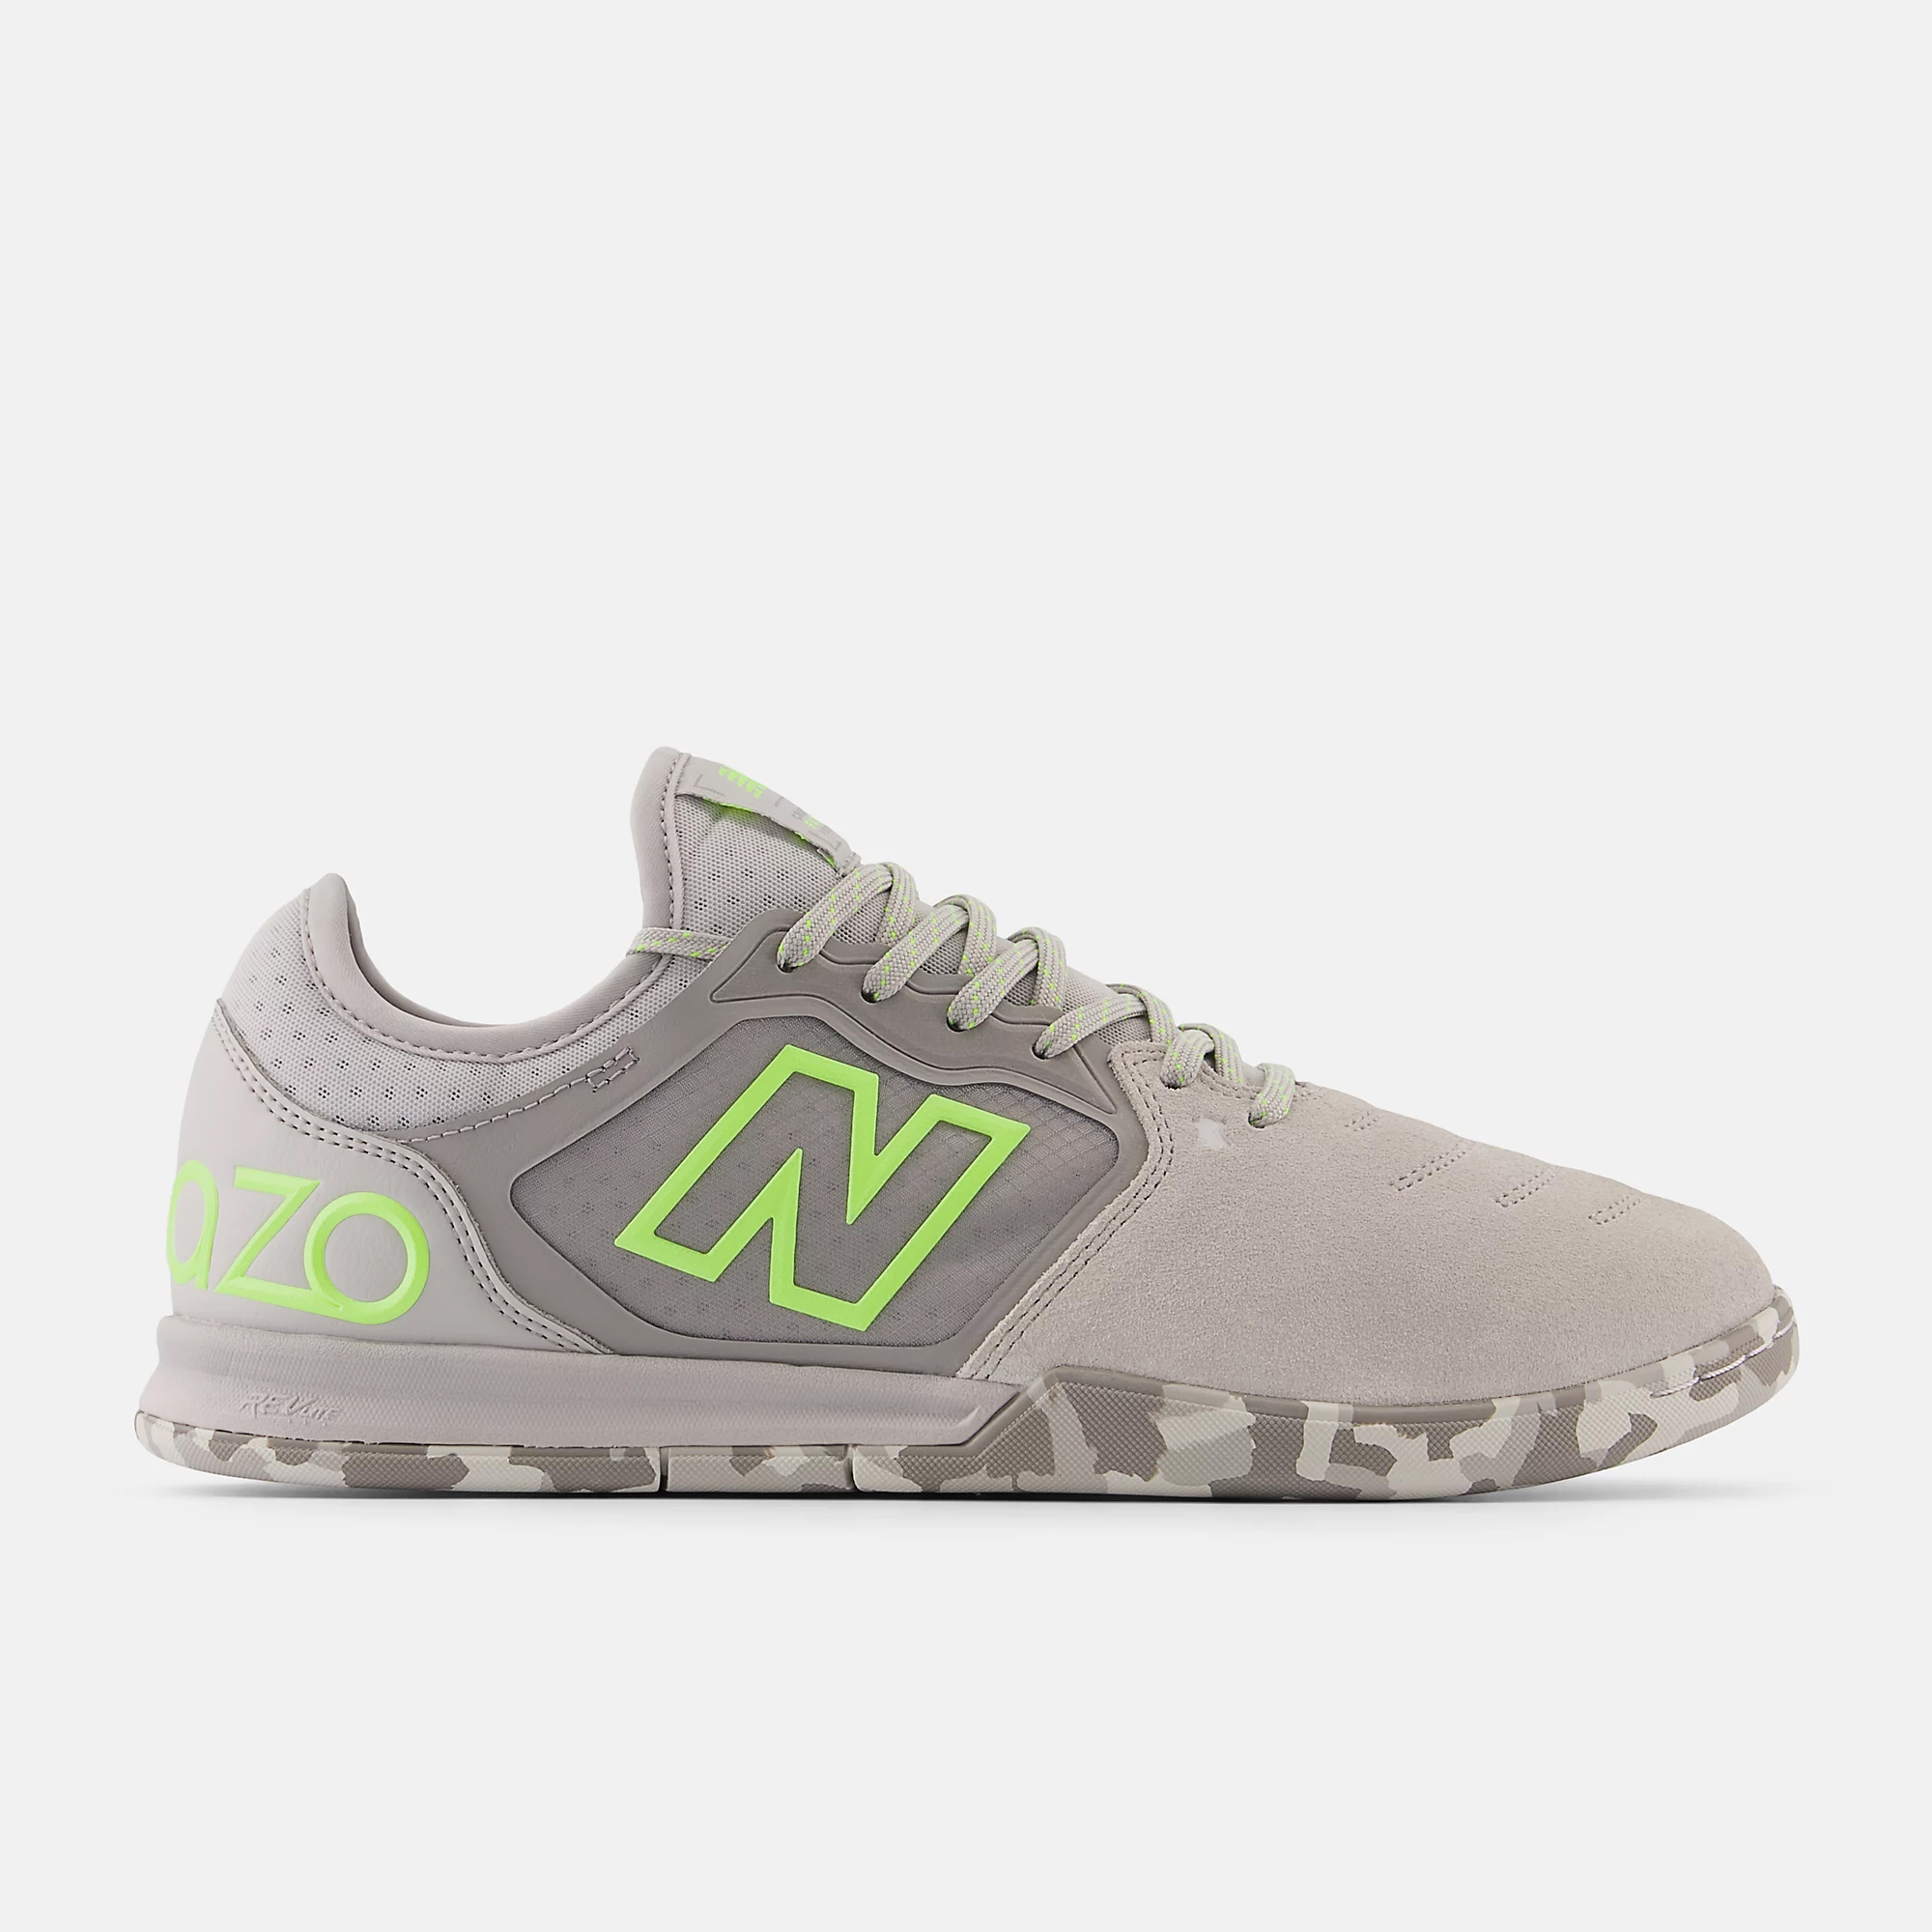 statisch uitvegen Kan niet stefanssoccer.com:New Balance Audazo V5+ Pro Suede Indoor Soccer Shoes (2E  Wide) - Light Grey